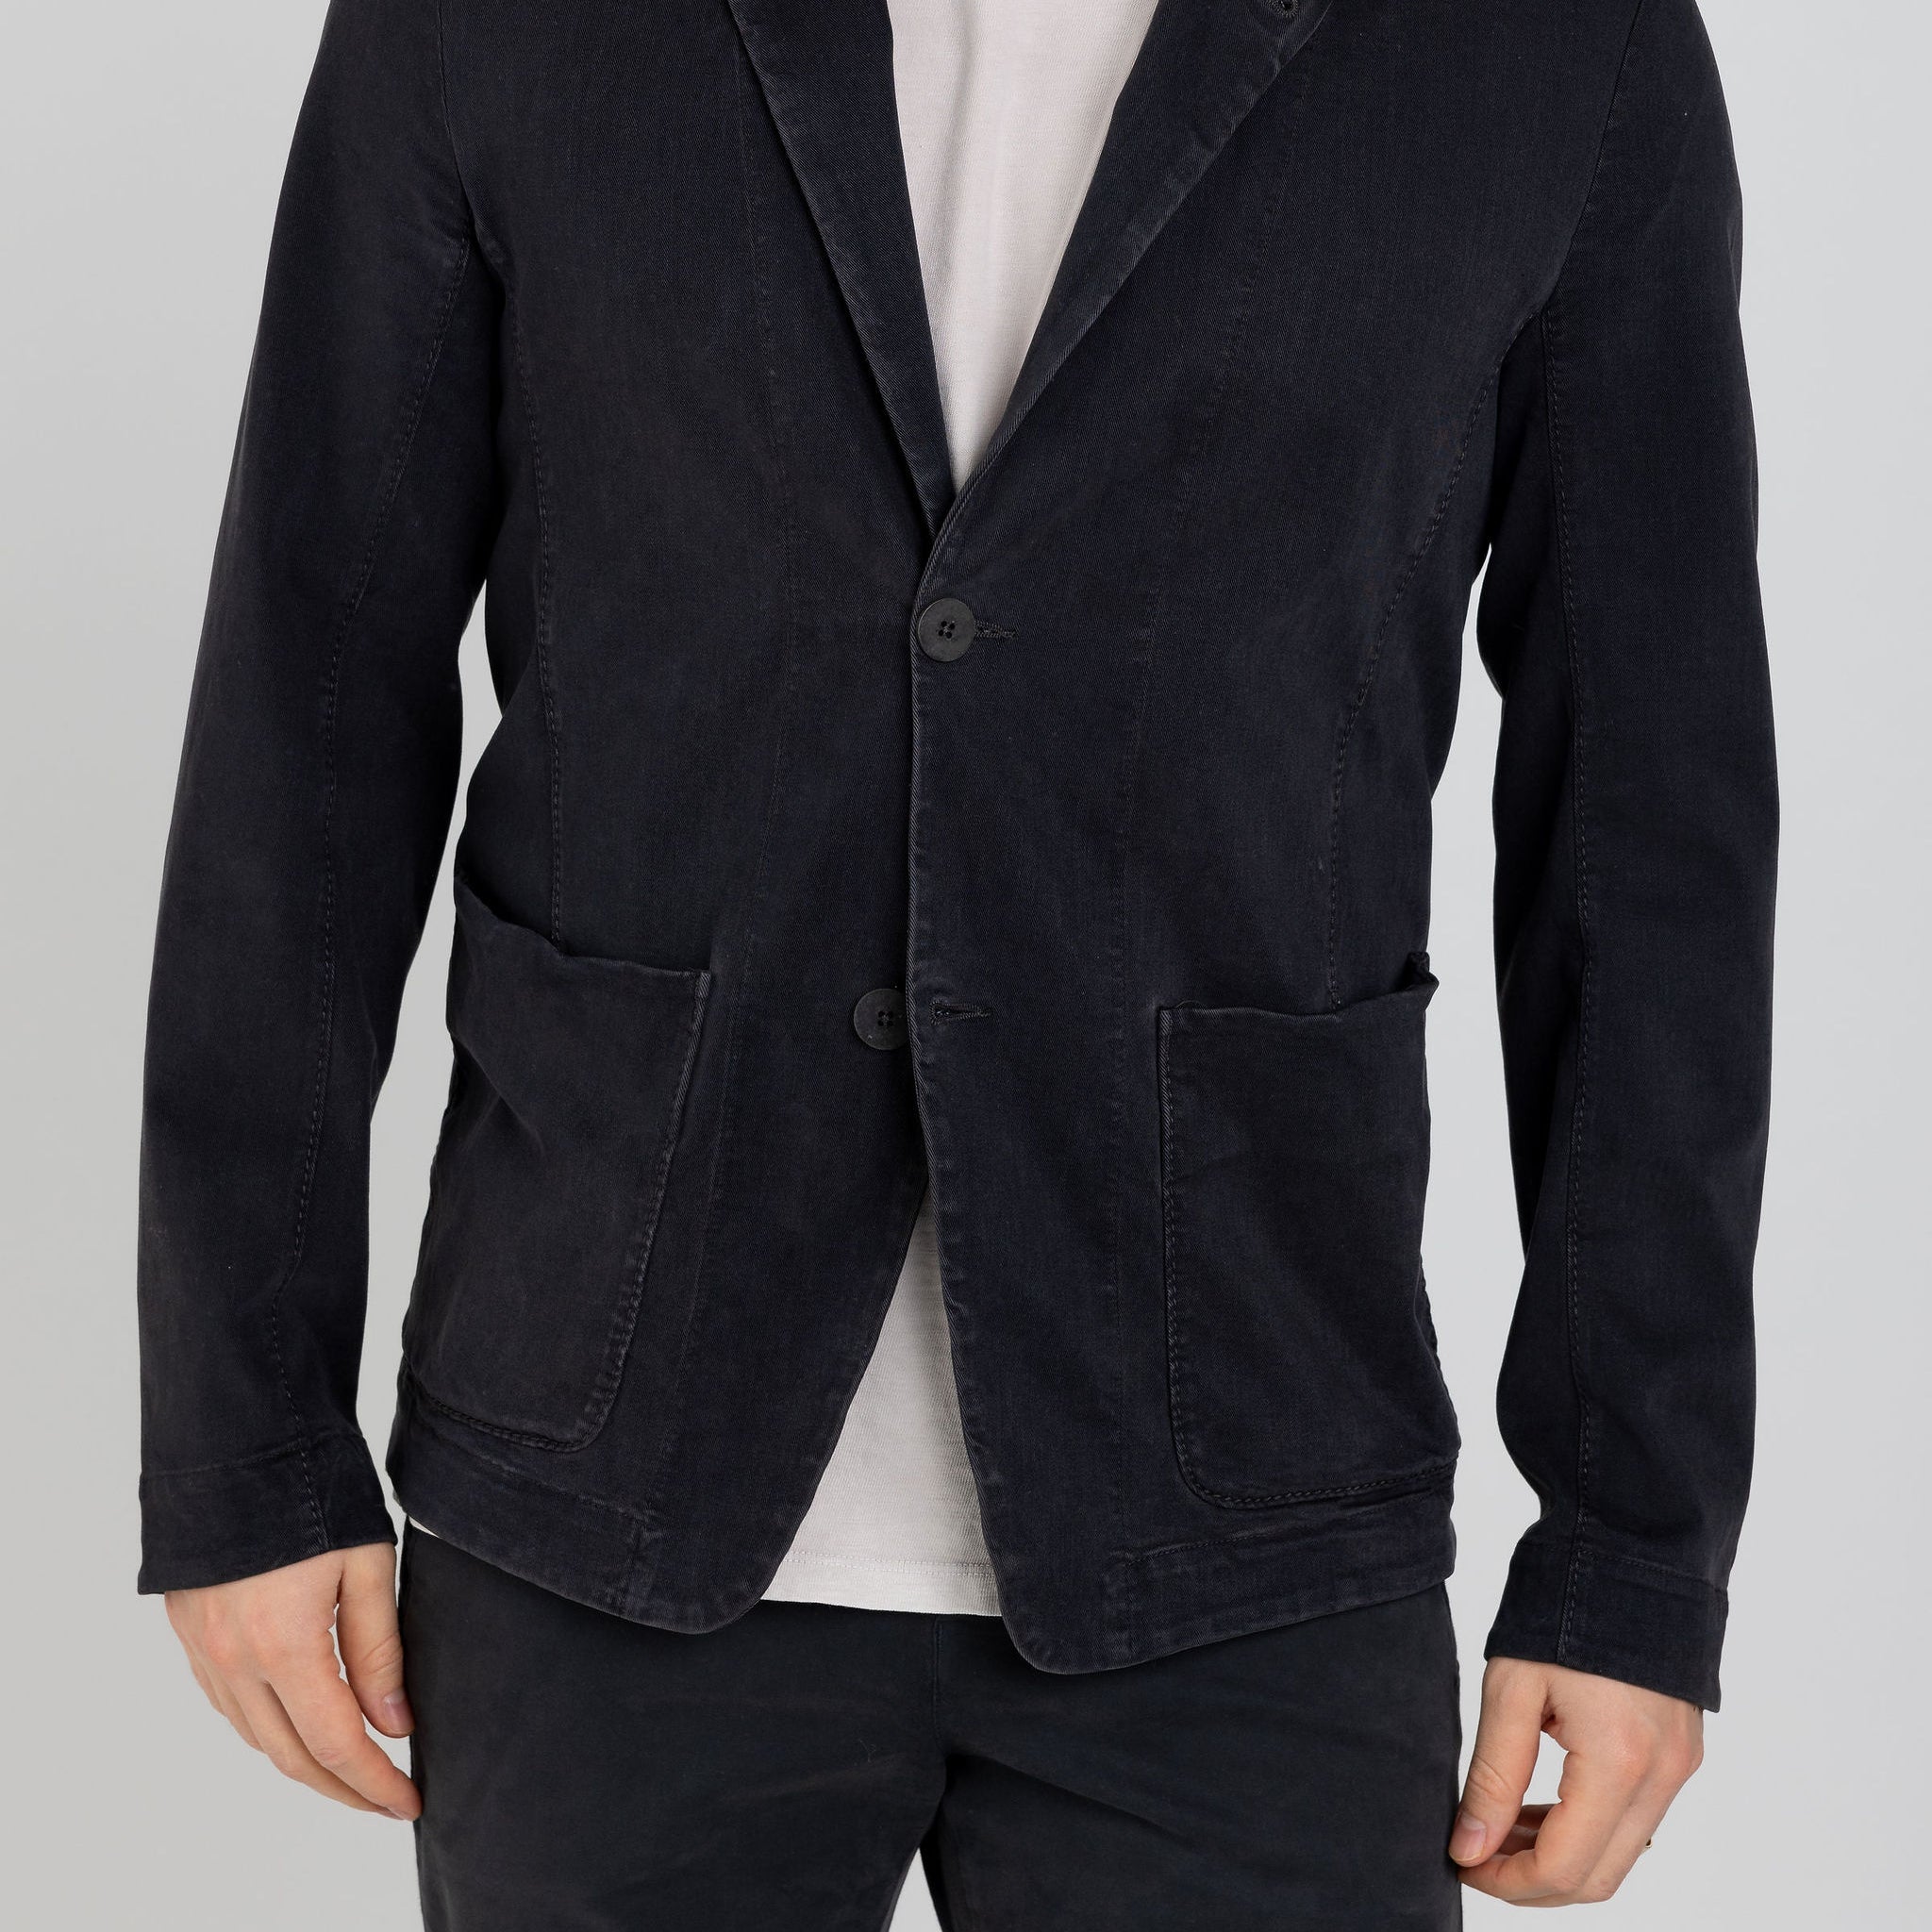 TRANSIT Blazer Jacket in Charcoal